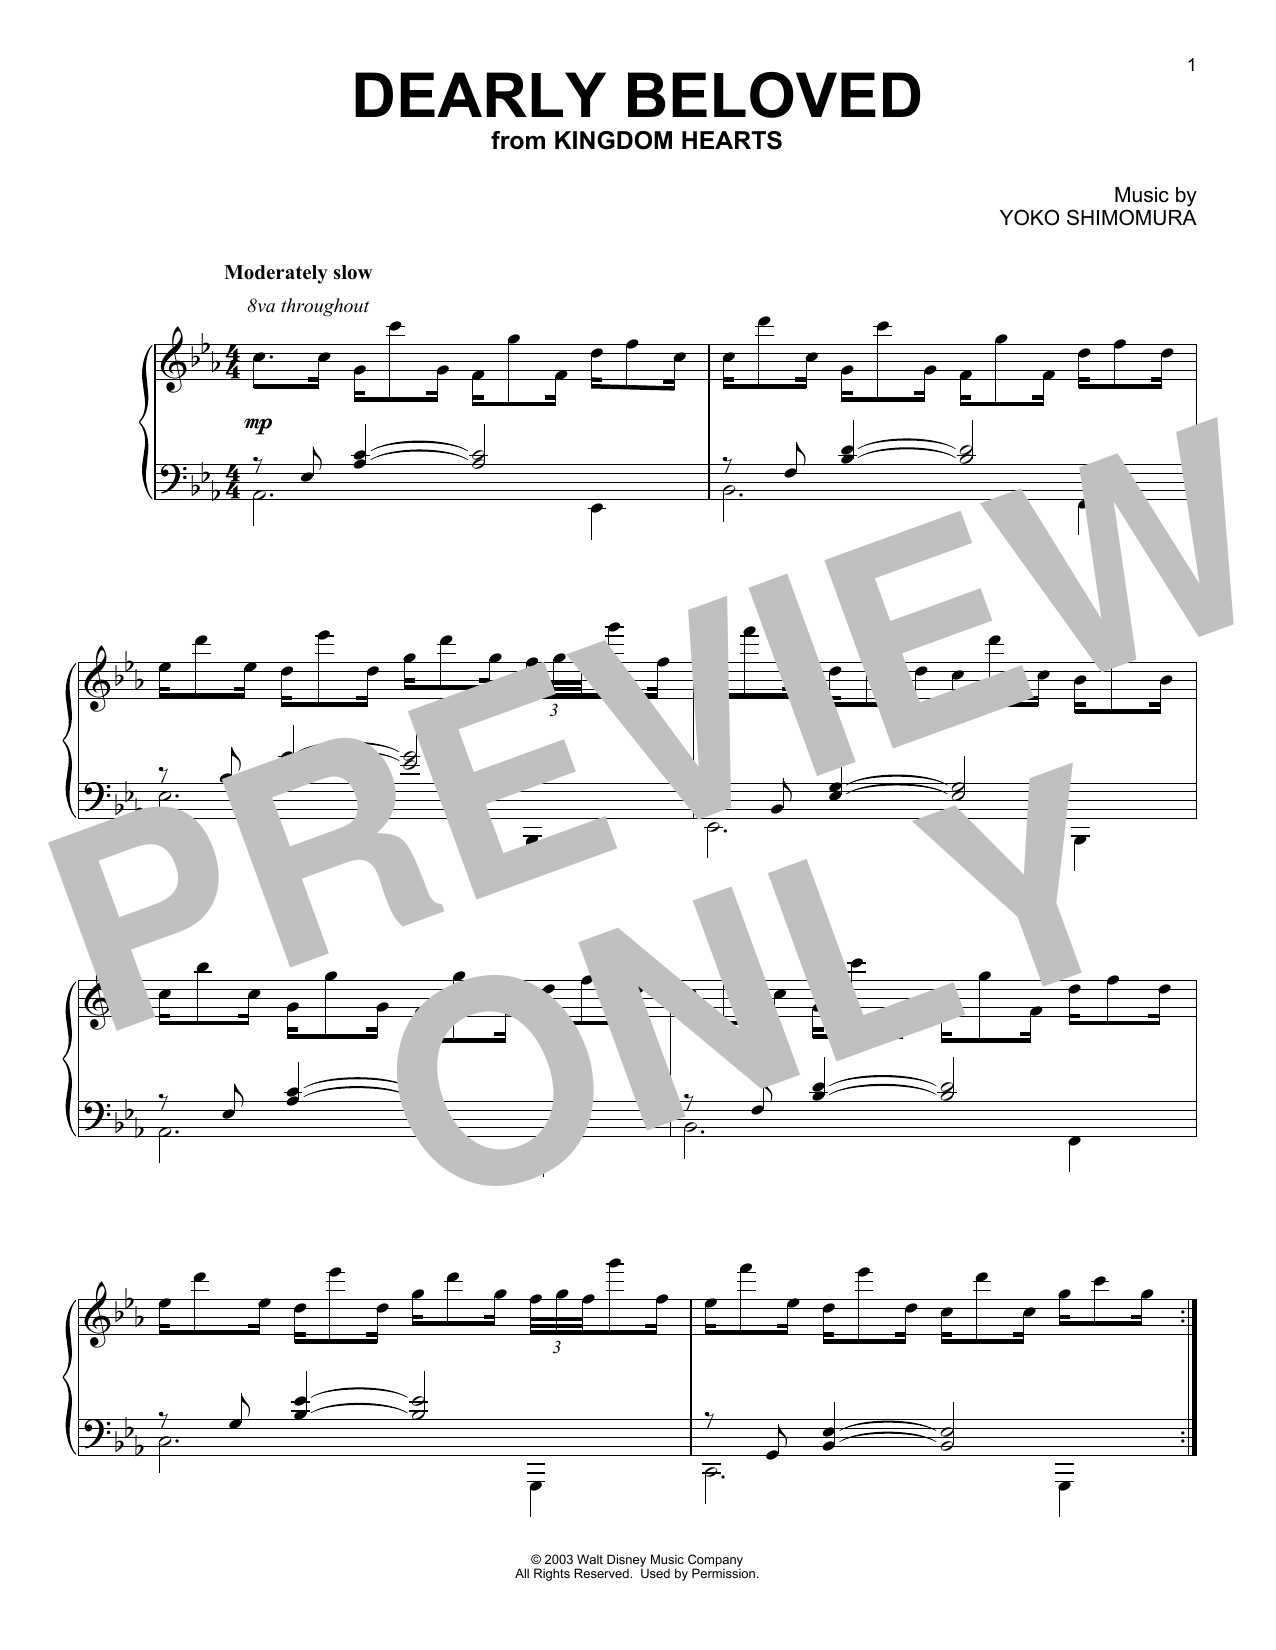 Yoko Shimomura Dearly Beloved Sheet Music Notes & Chords for Piano - Download or Print PDF